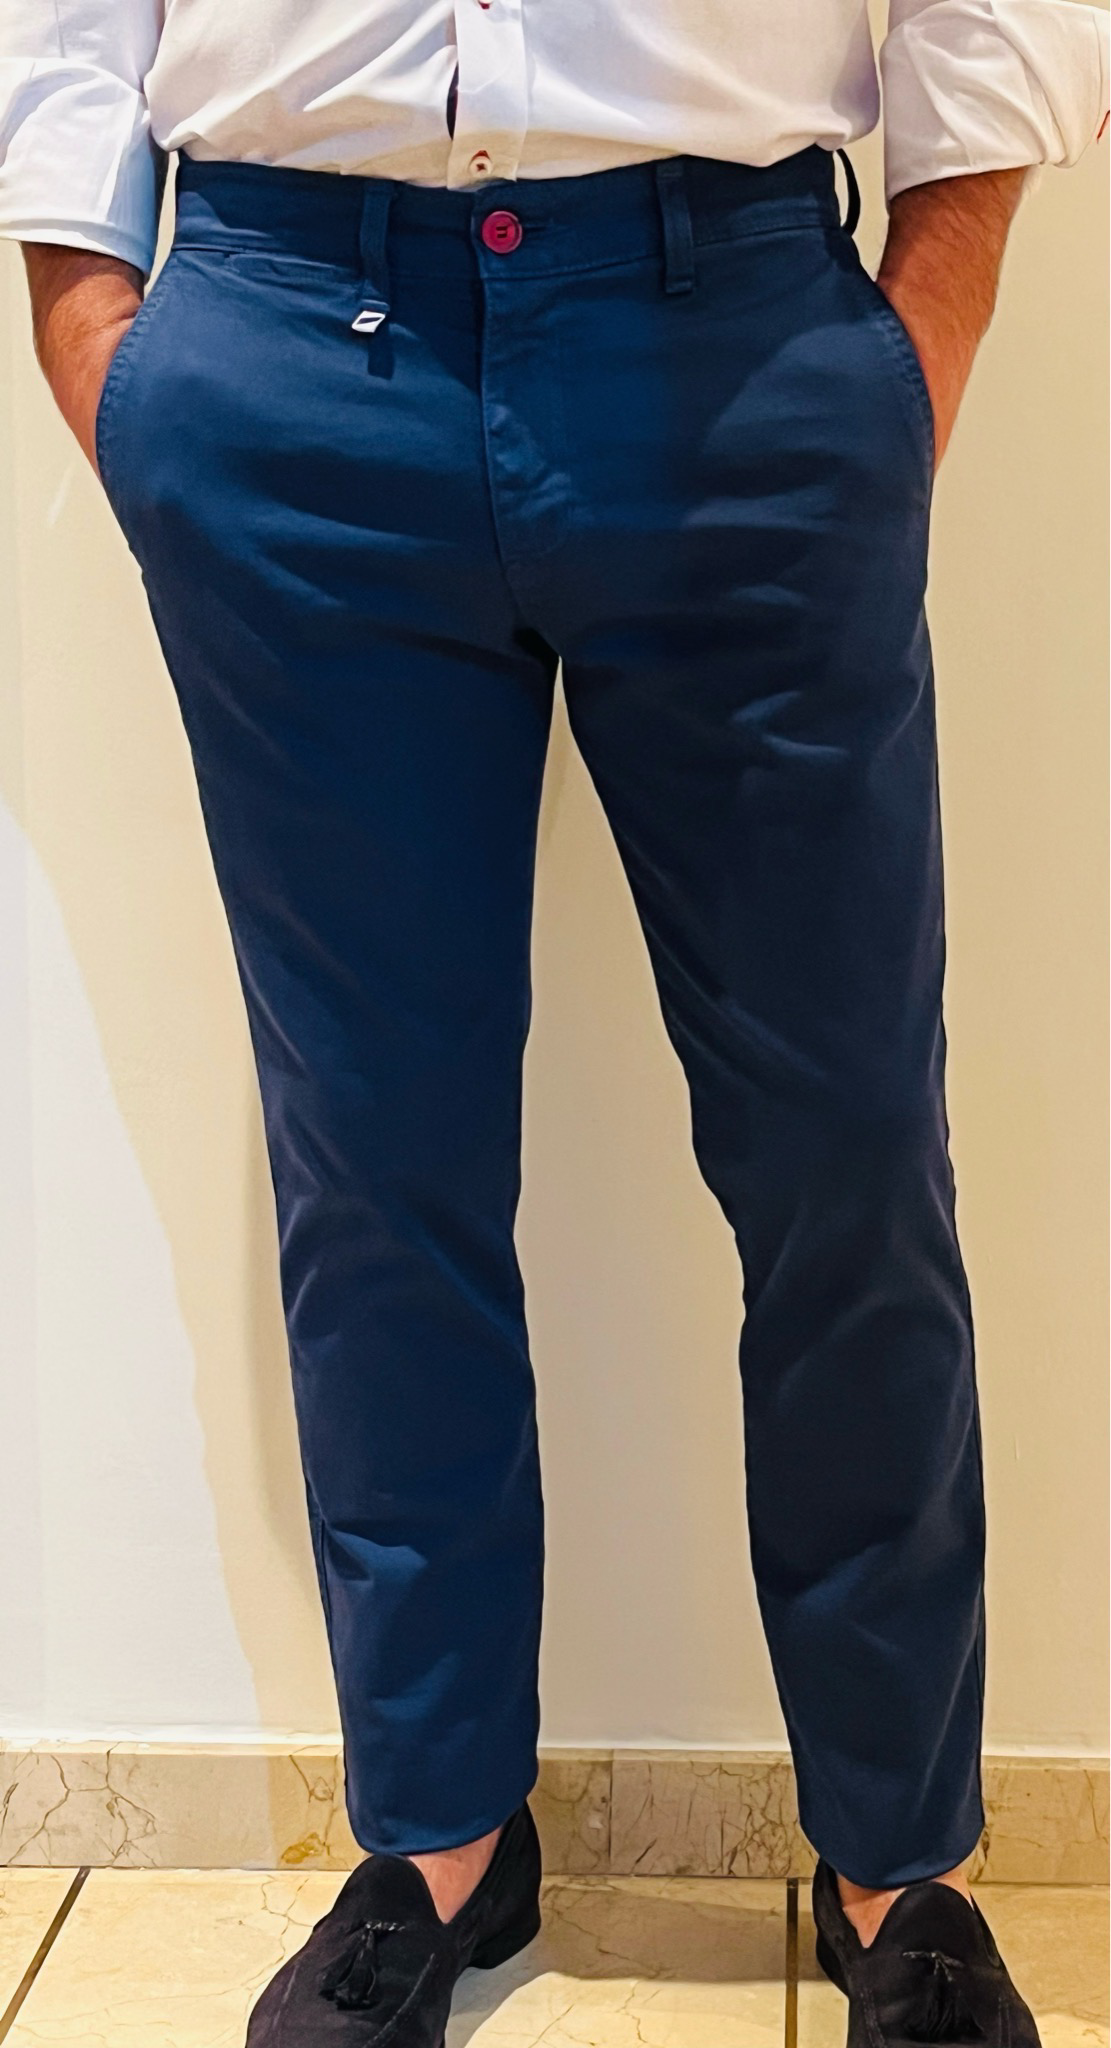 Marine blue pant